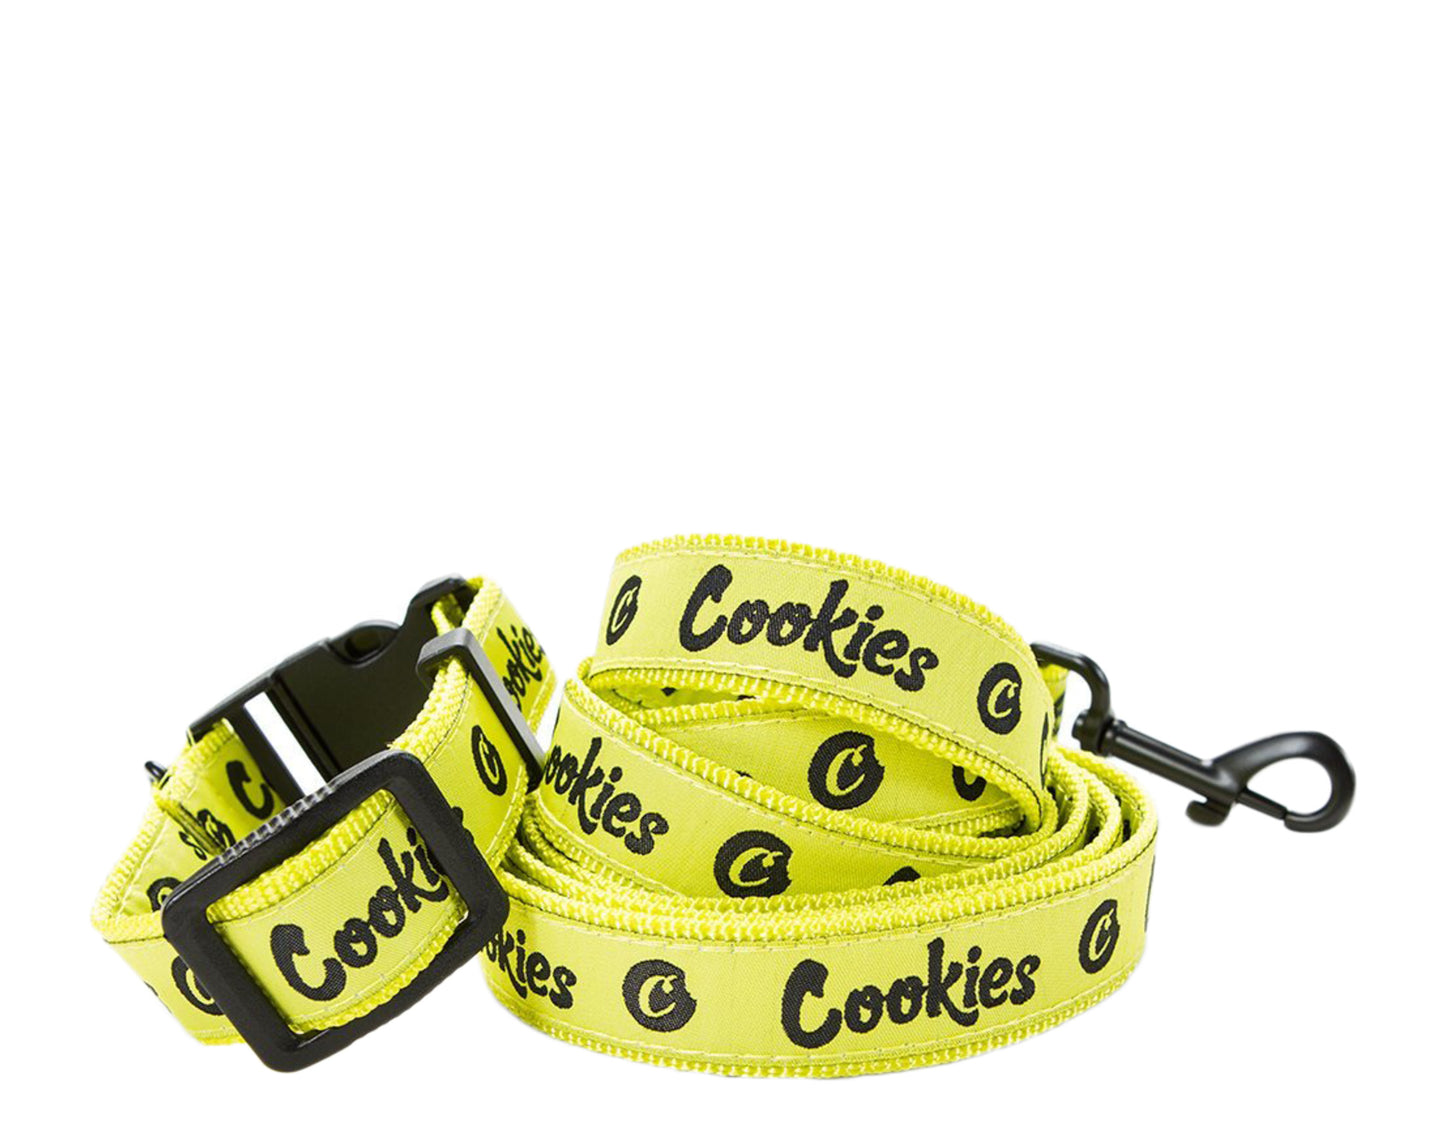 Cookies Original Logo Thin Mint Volt Yellow Dog Leash And Collar 1544A4245-VLT